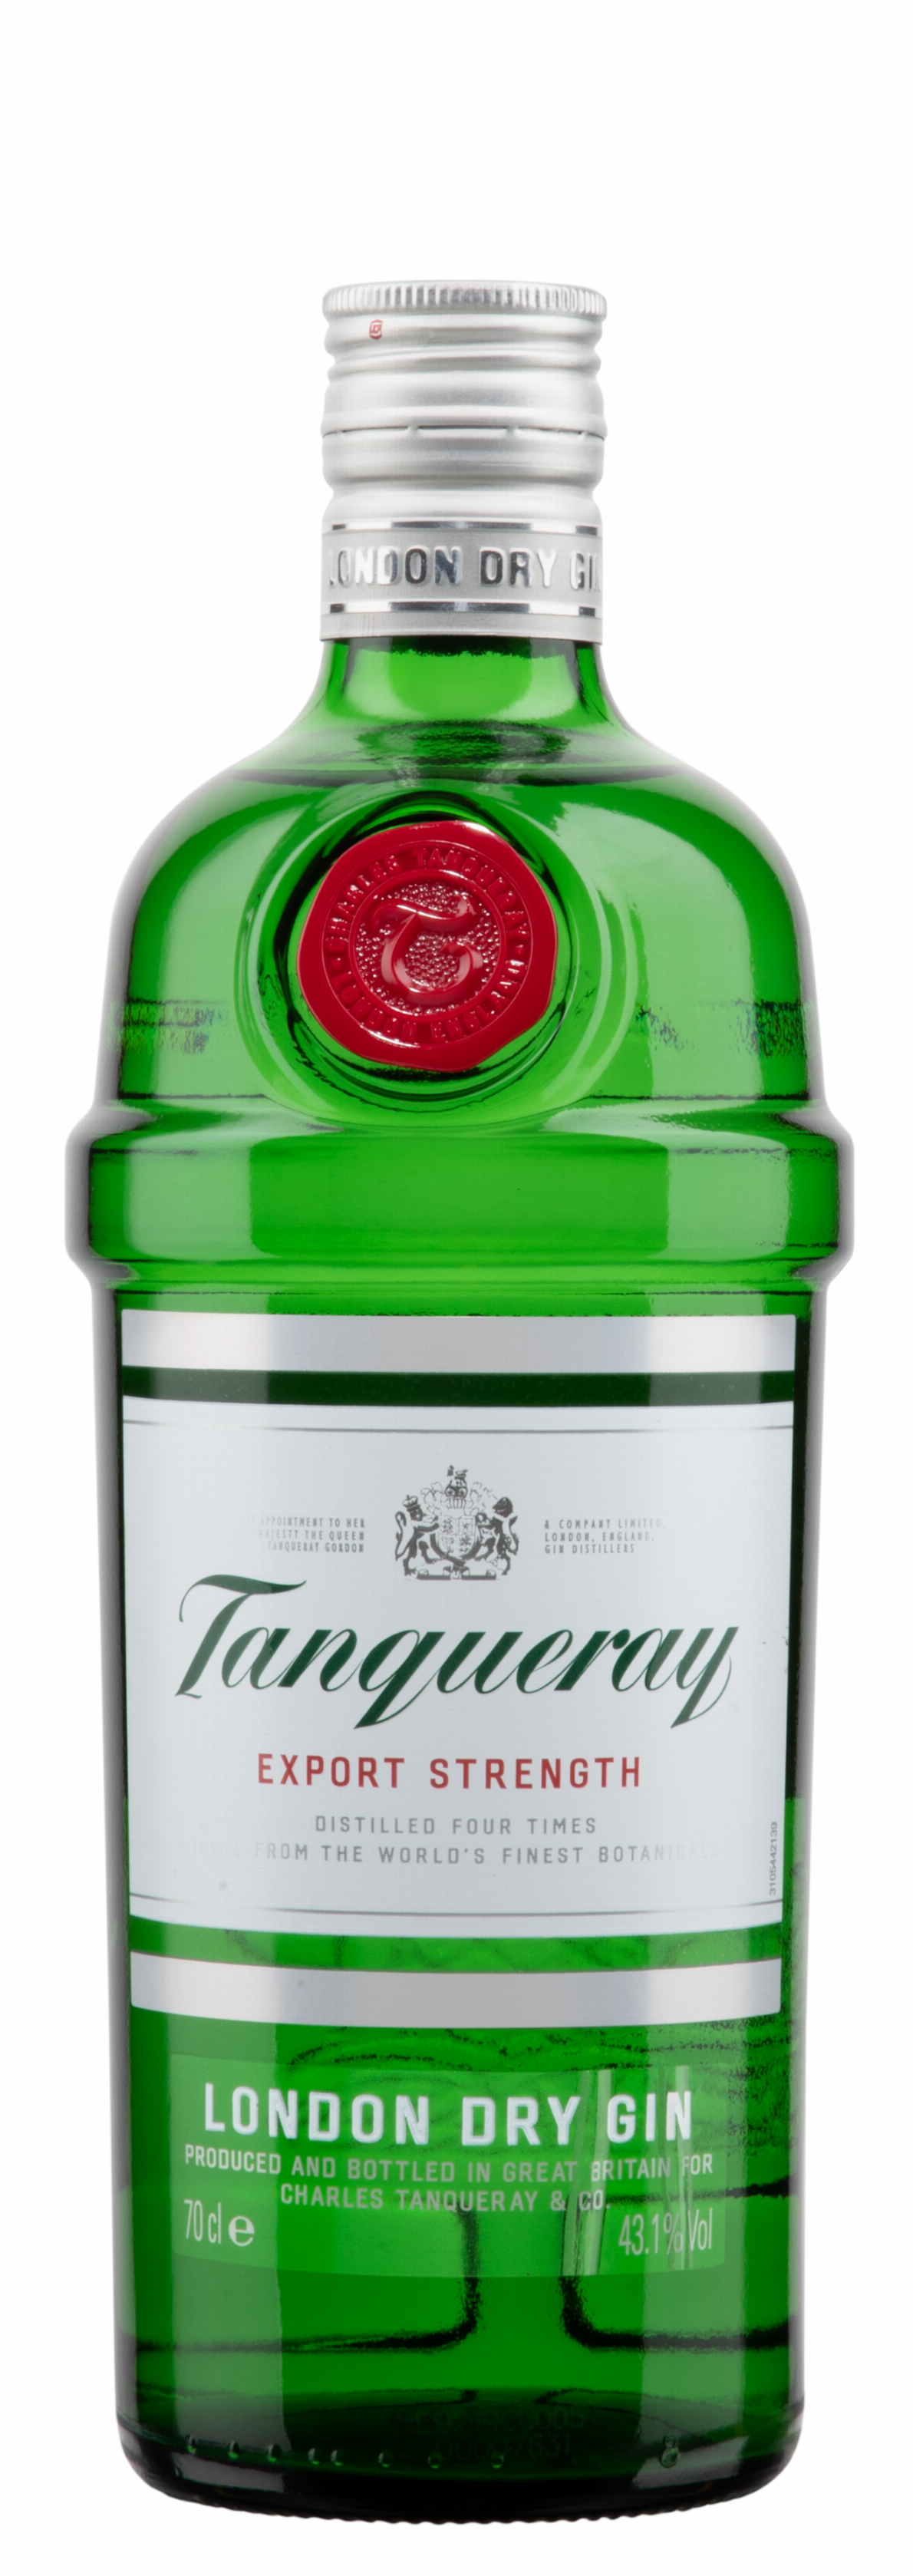 43.1% Dry liefern Gin Hause London lassen » Tanqueray nach